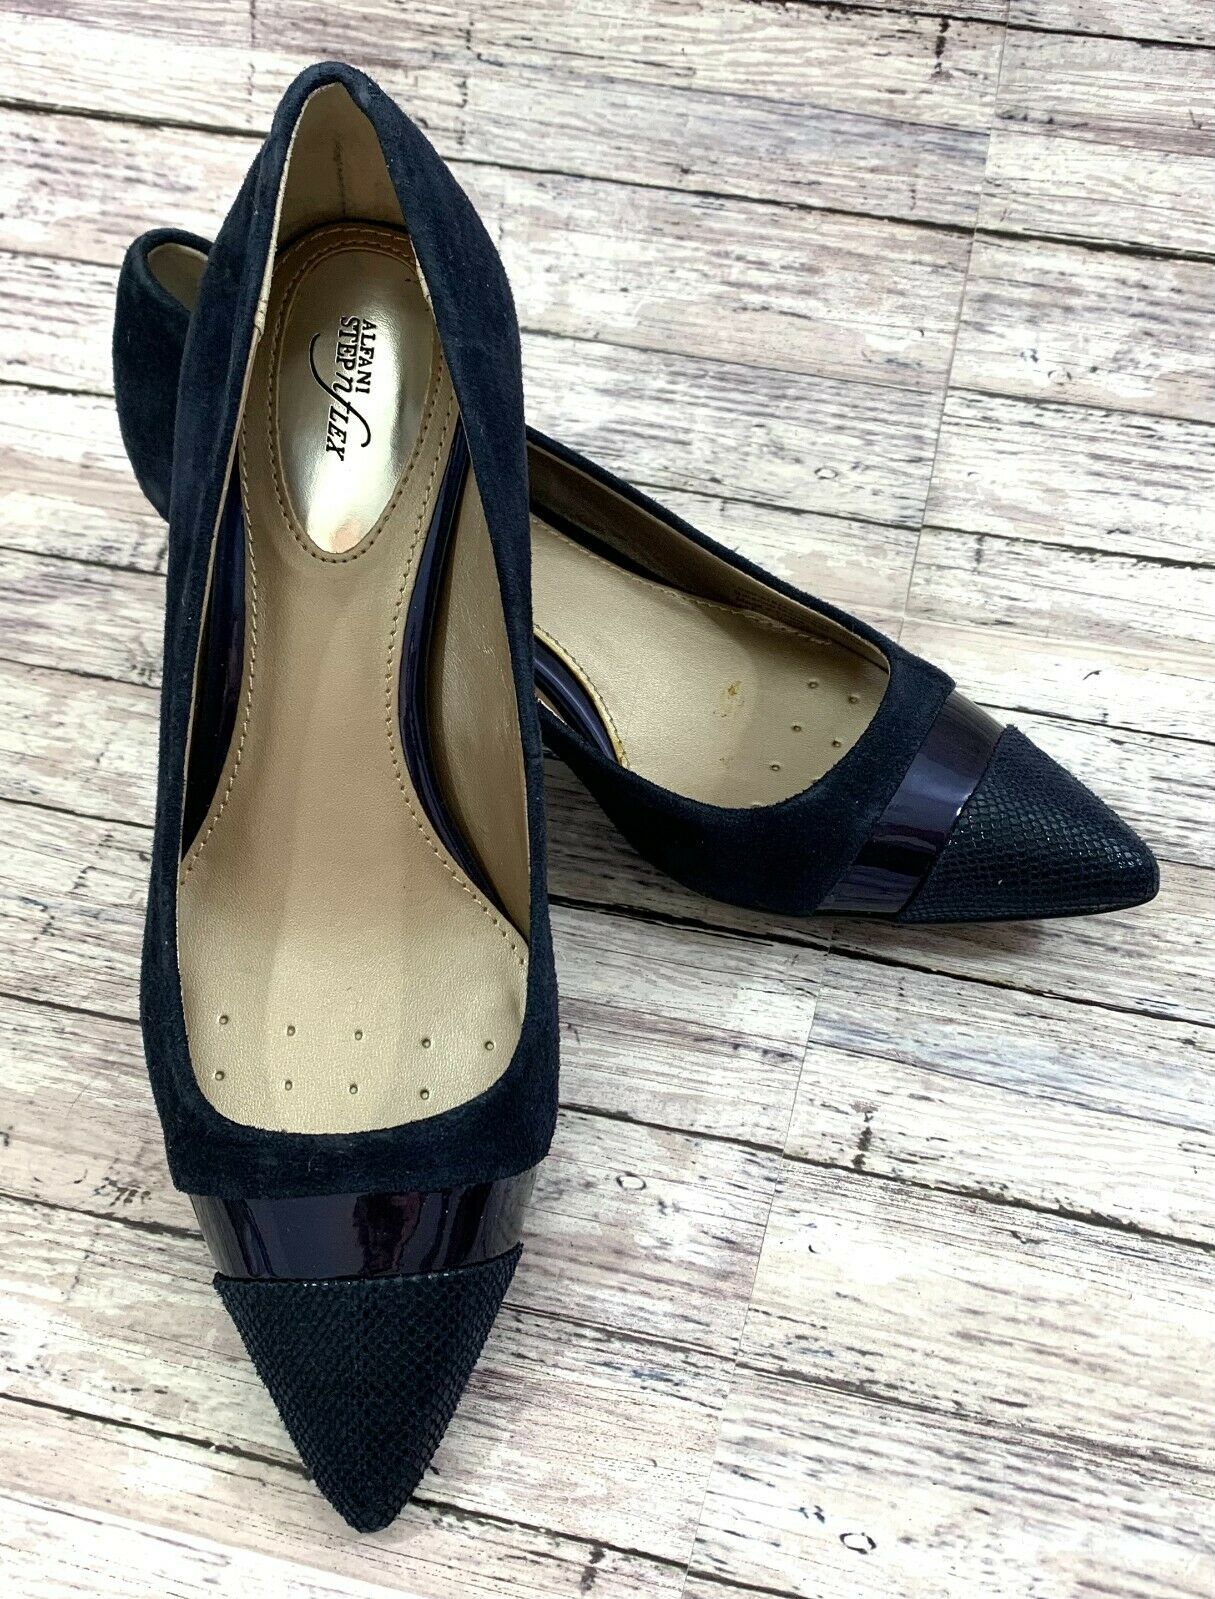 ALFANI Women's Pumps Dress Shoes Sz 6.5M Navy Blue Suede Kitten Heel Step n Flex